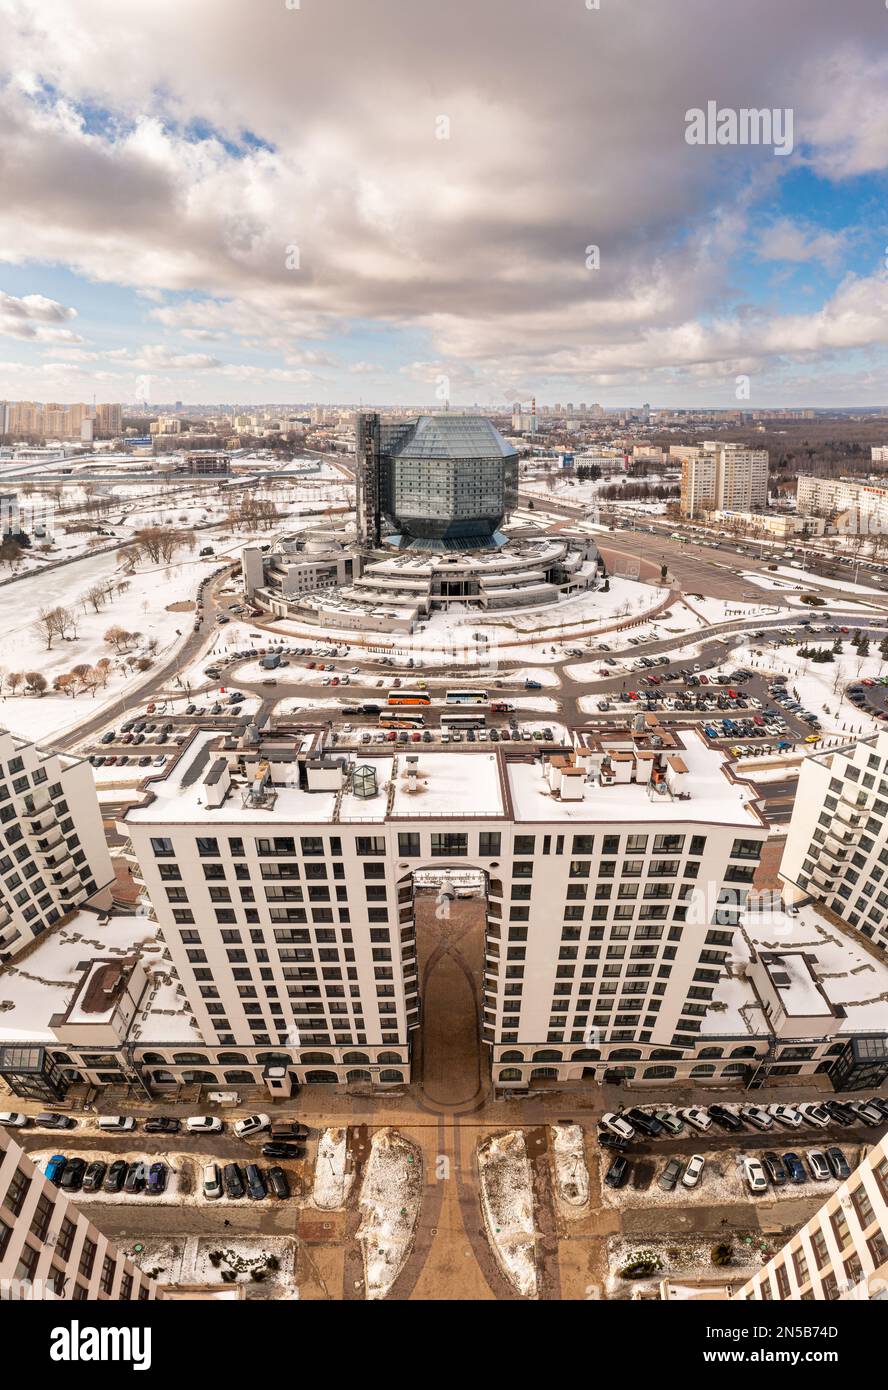 Minsk, Belarus. National Library Building In Winter. Famous Landmark. Aerial cityscape Stock Photo